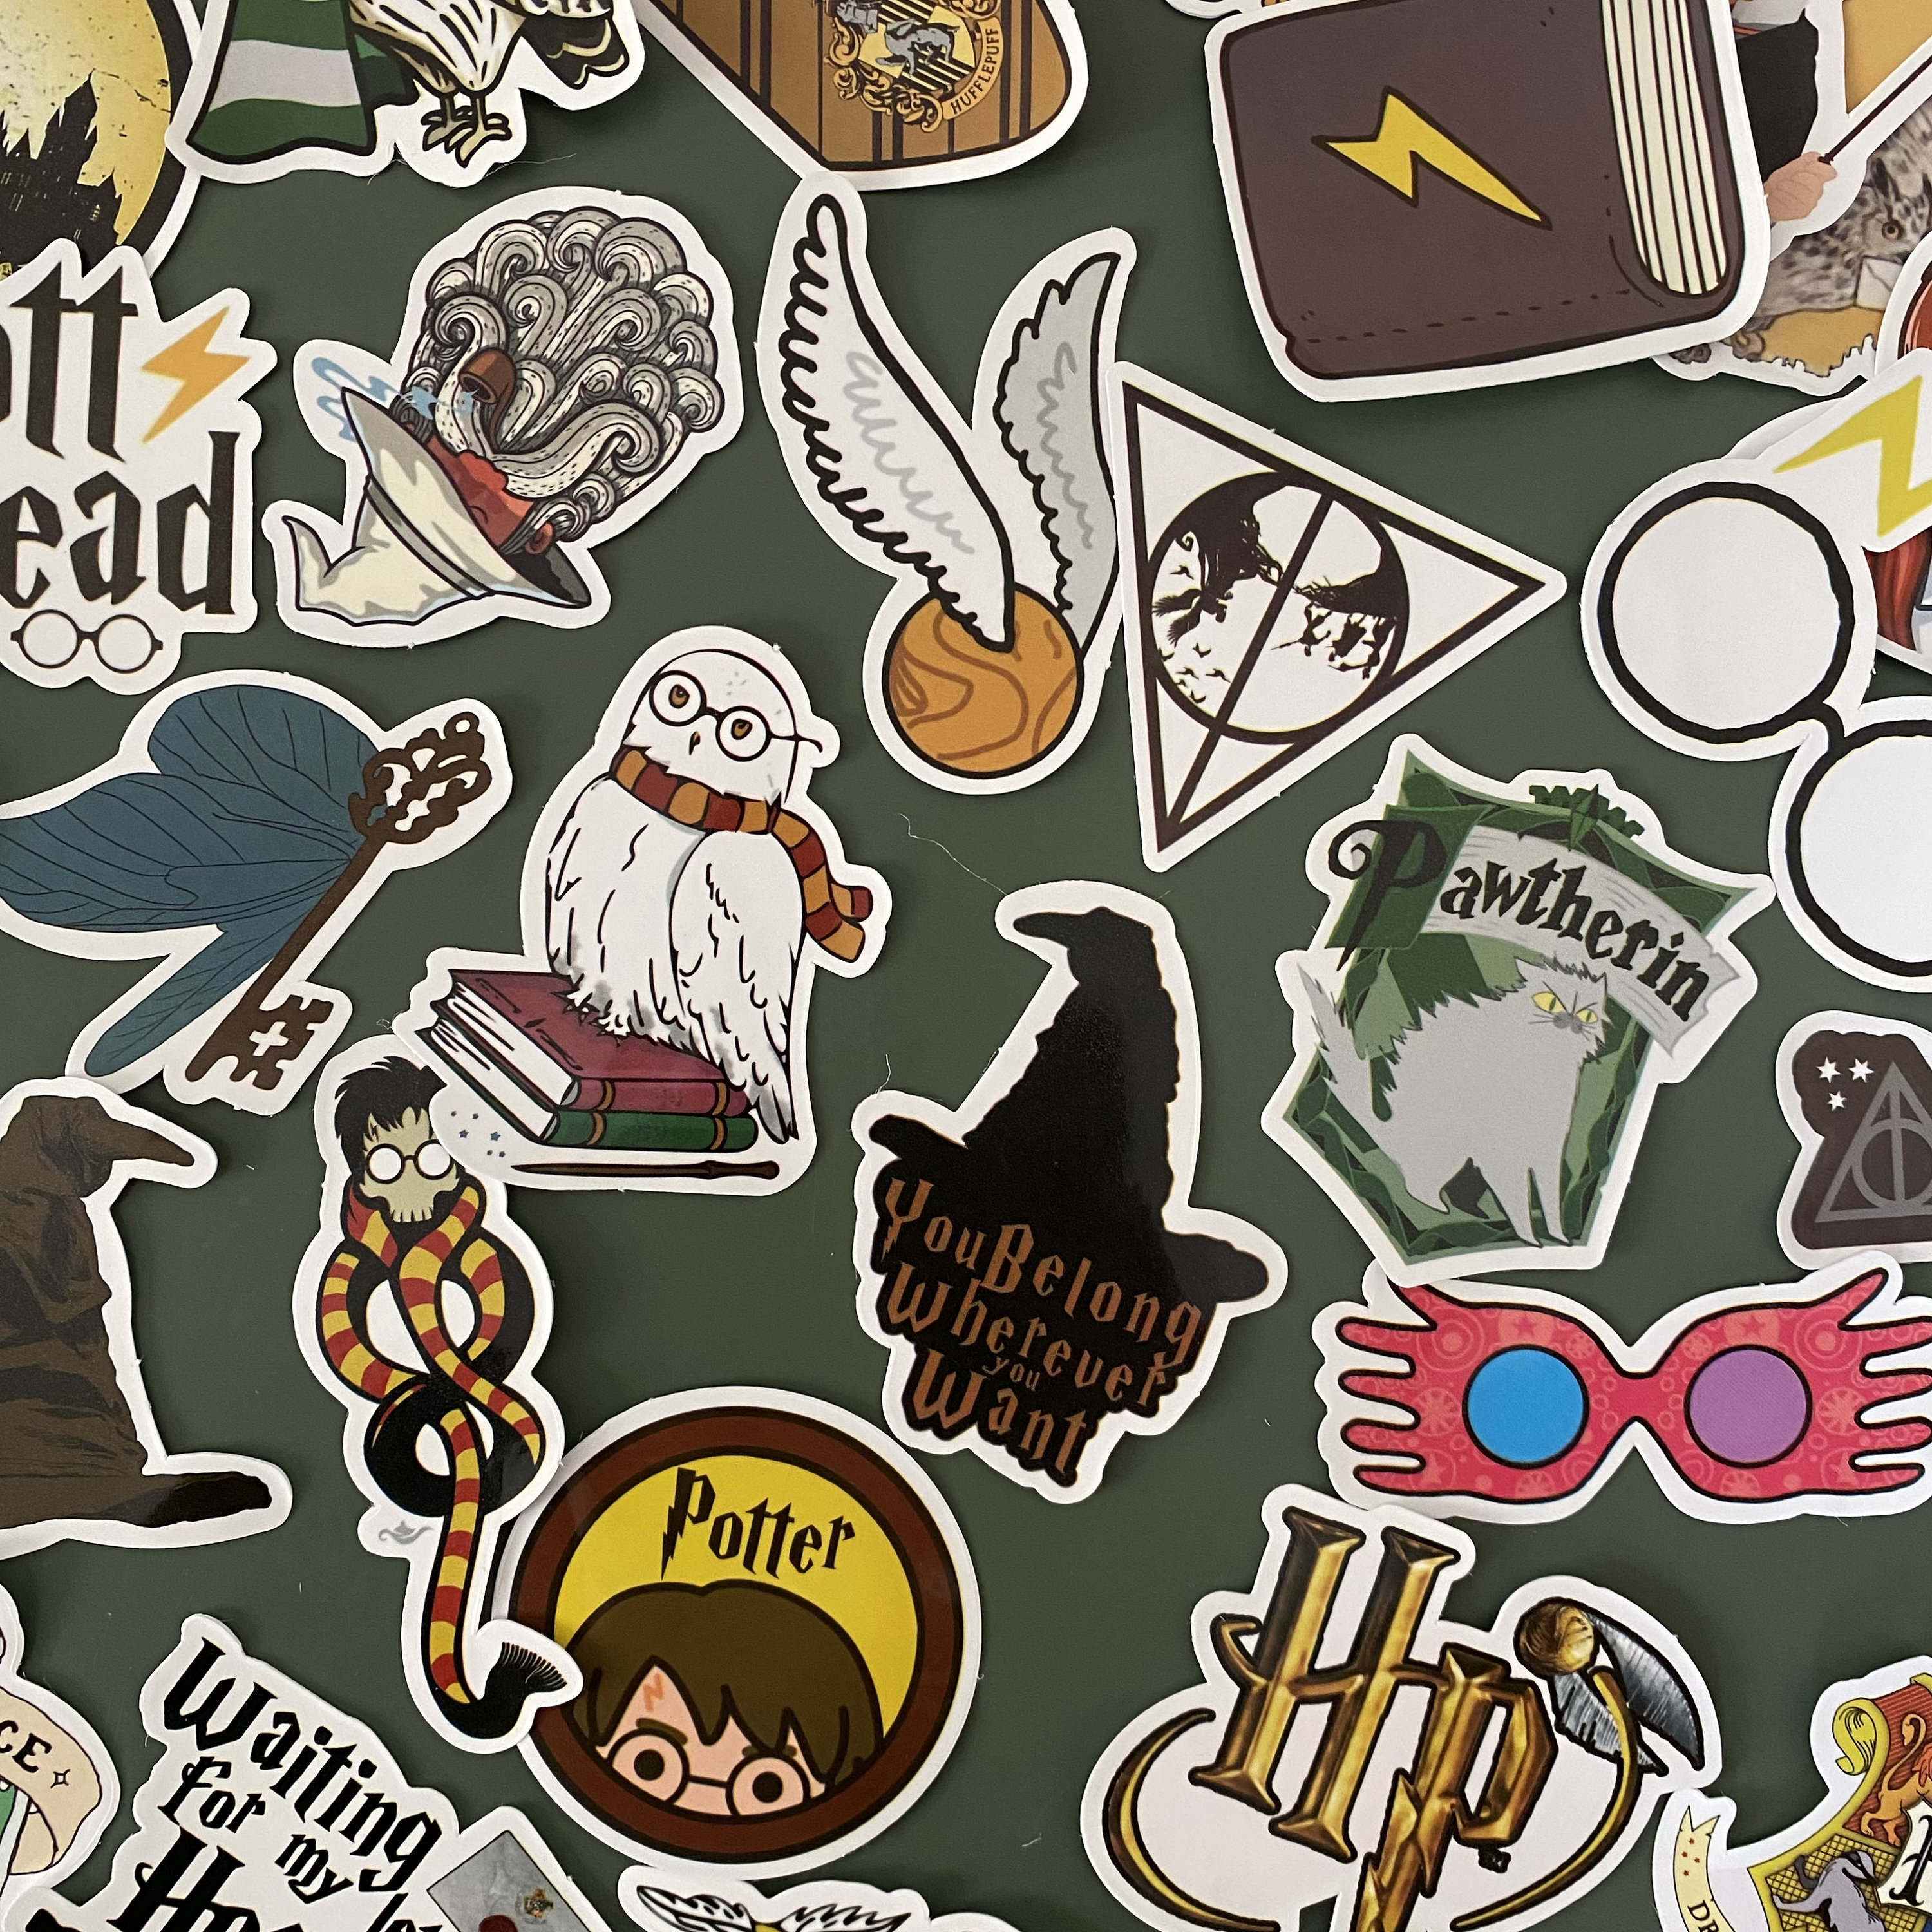 Cute Harry Potter inspired Hogwarts Chibi Sticker Set